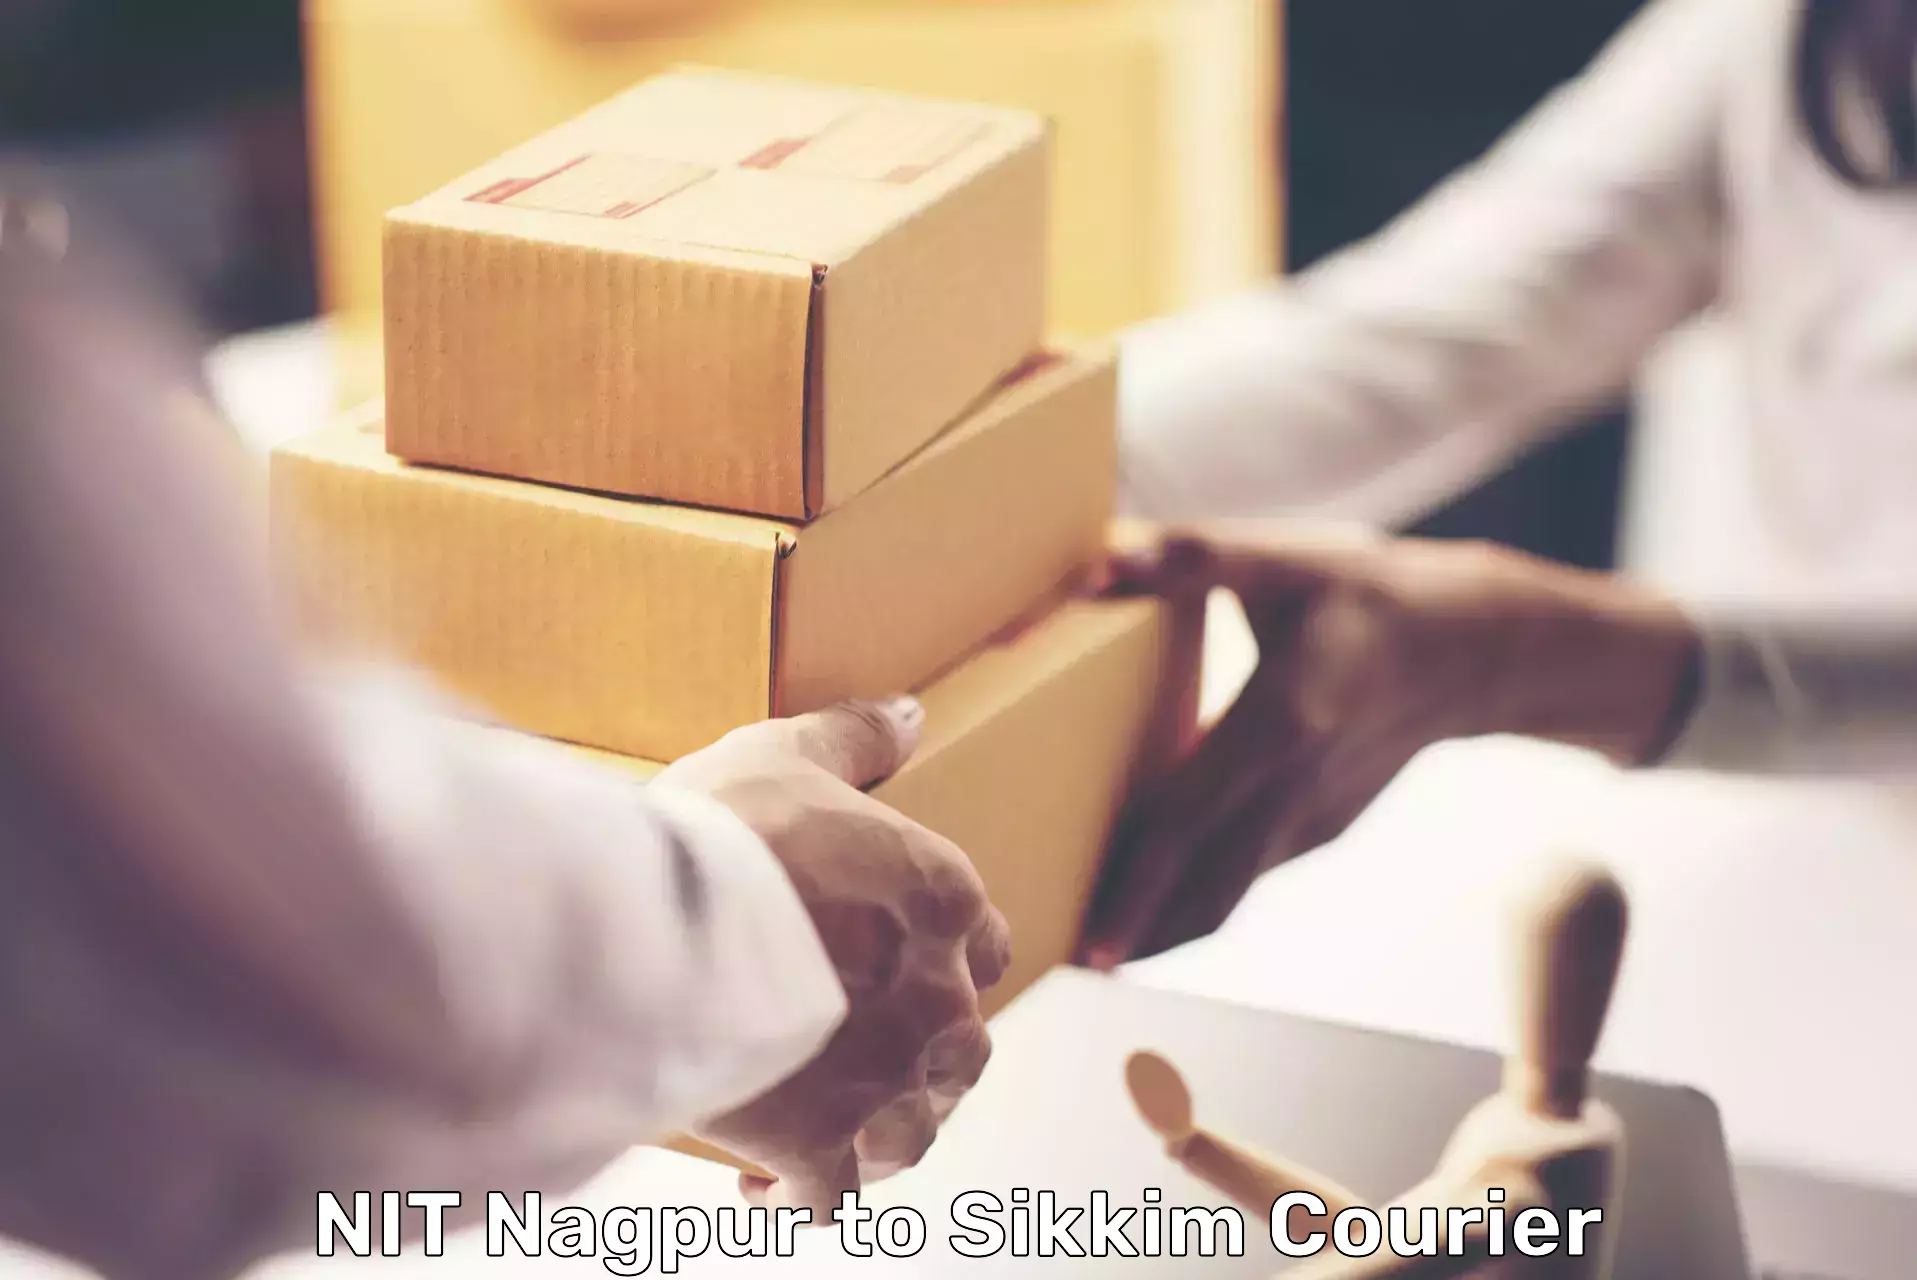 International parcel service NIT Nagpur to Gangtok